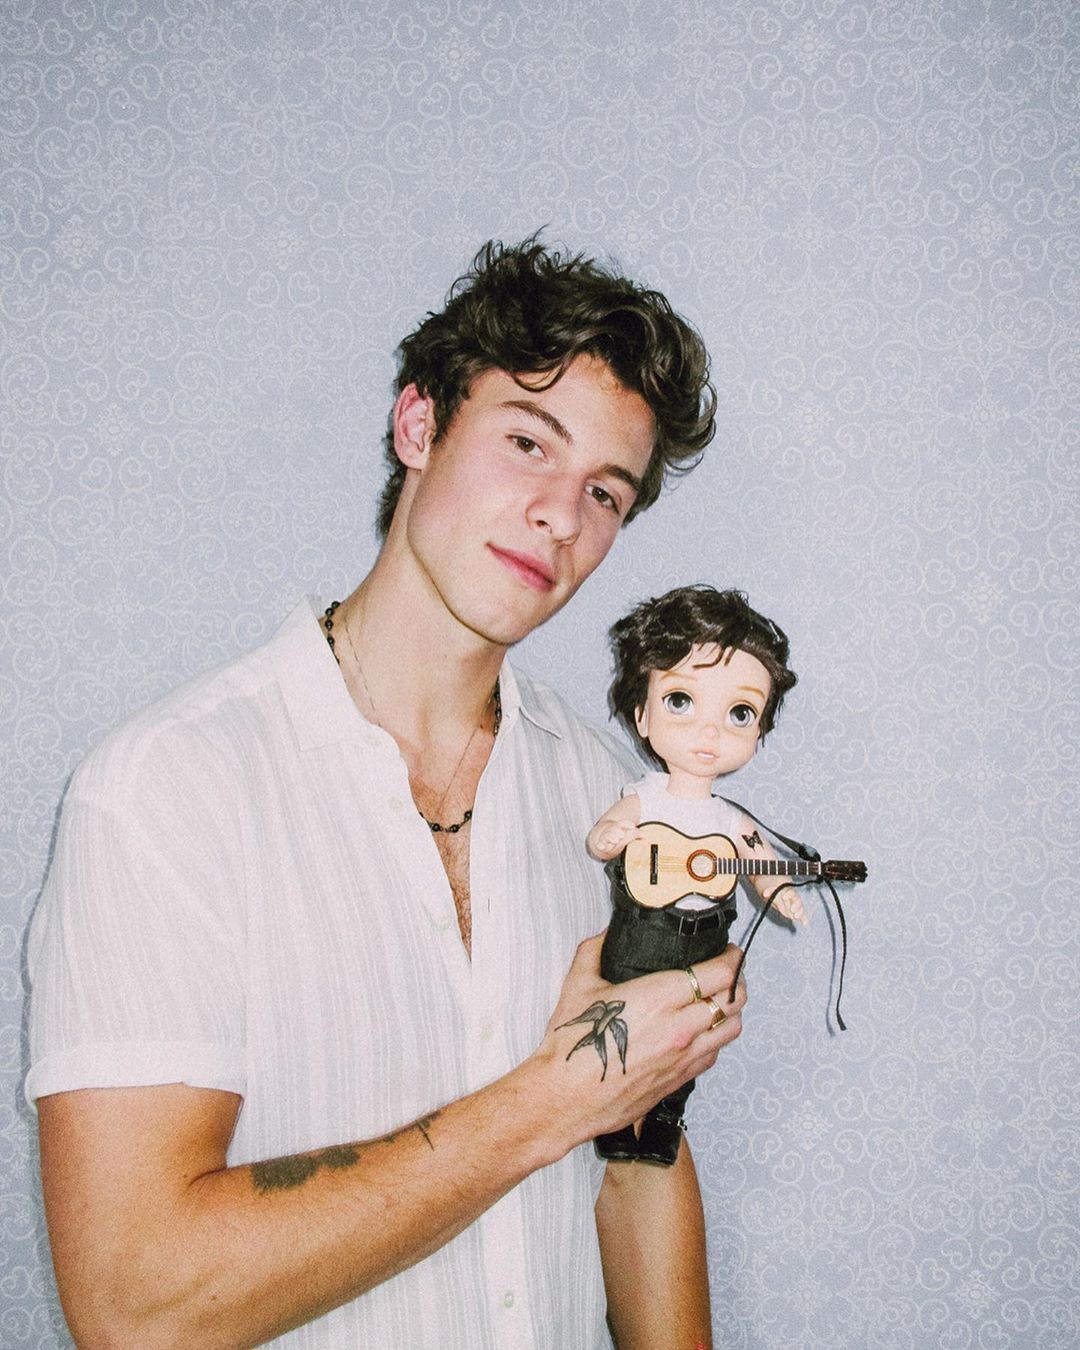 Shawn Mendes e Shawn Mendes, o boneco (Foto: Reprodução/Instagram)